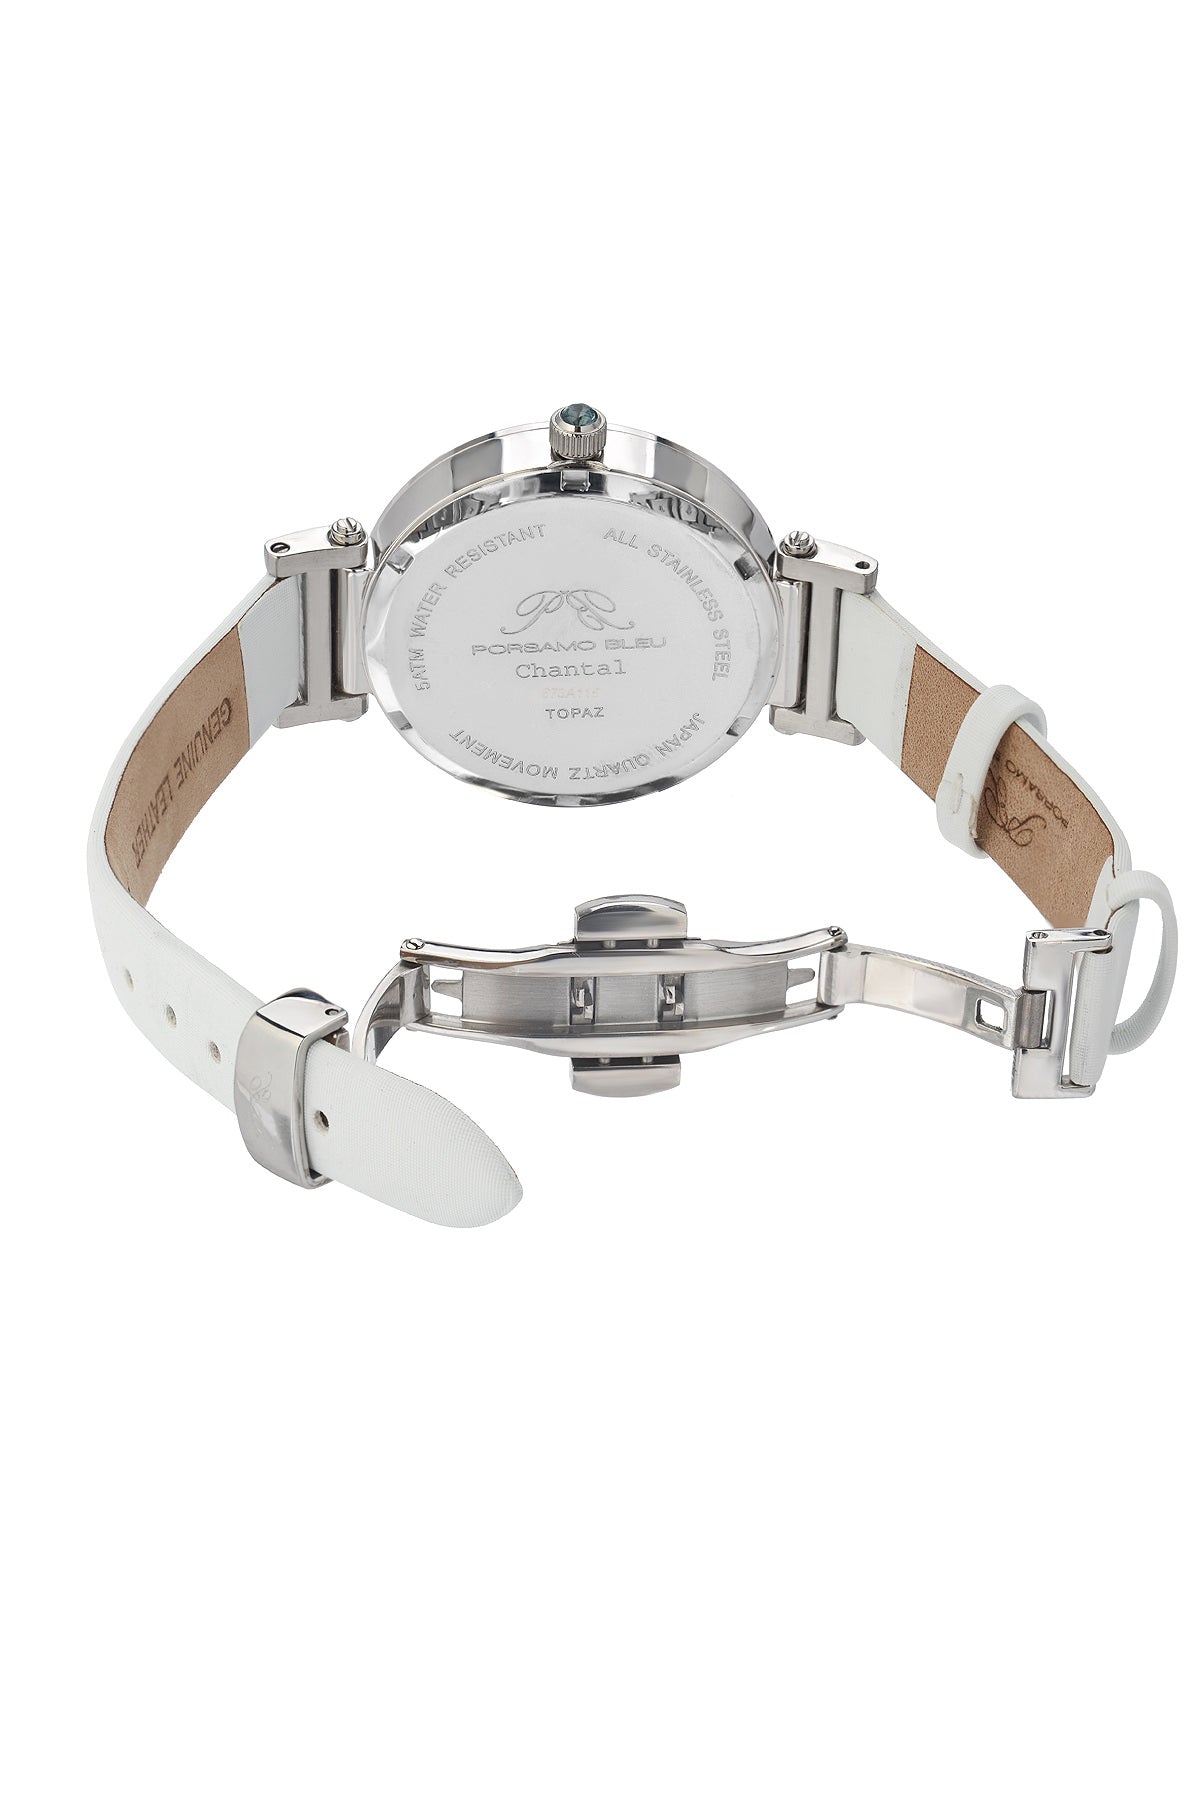 Porsamo Bleu Chantal Luxury Topaz Women's Watch, Satin Covered Genuine Leather Silver, White 673ACHL